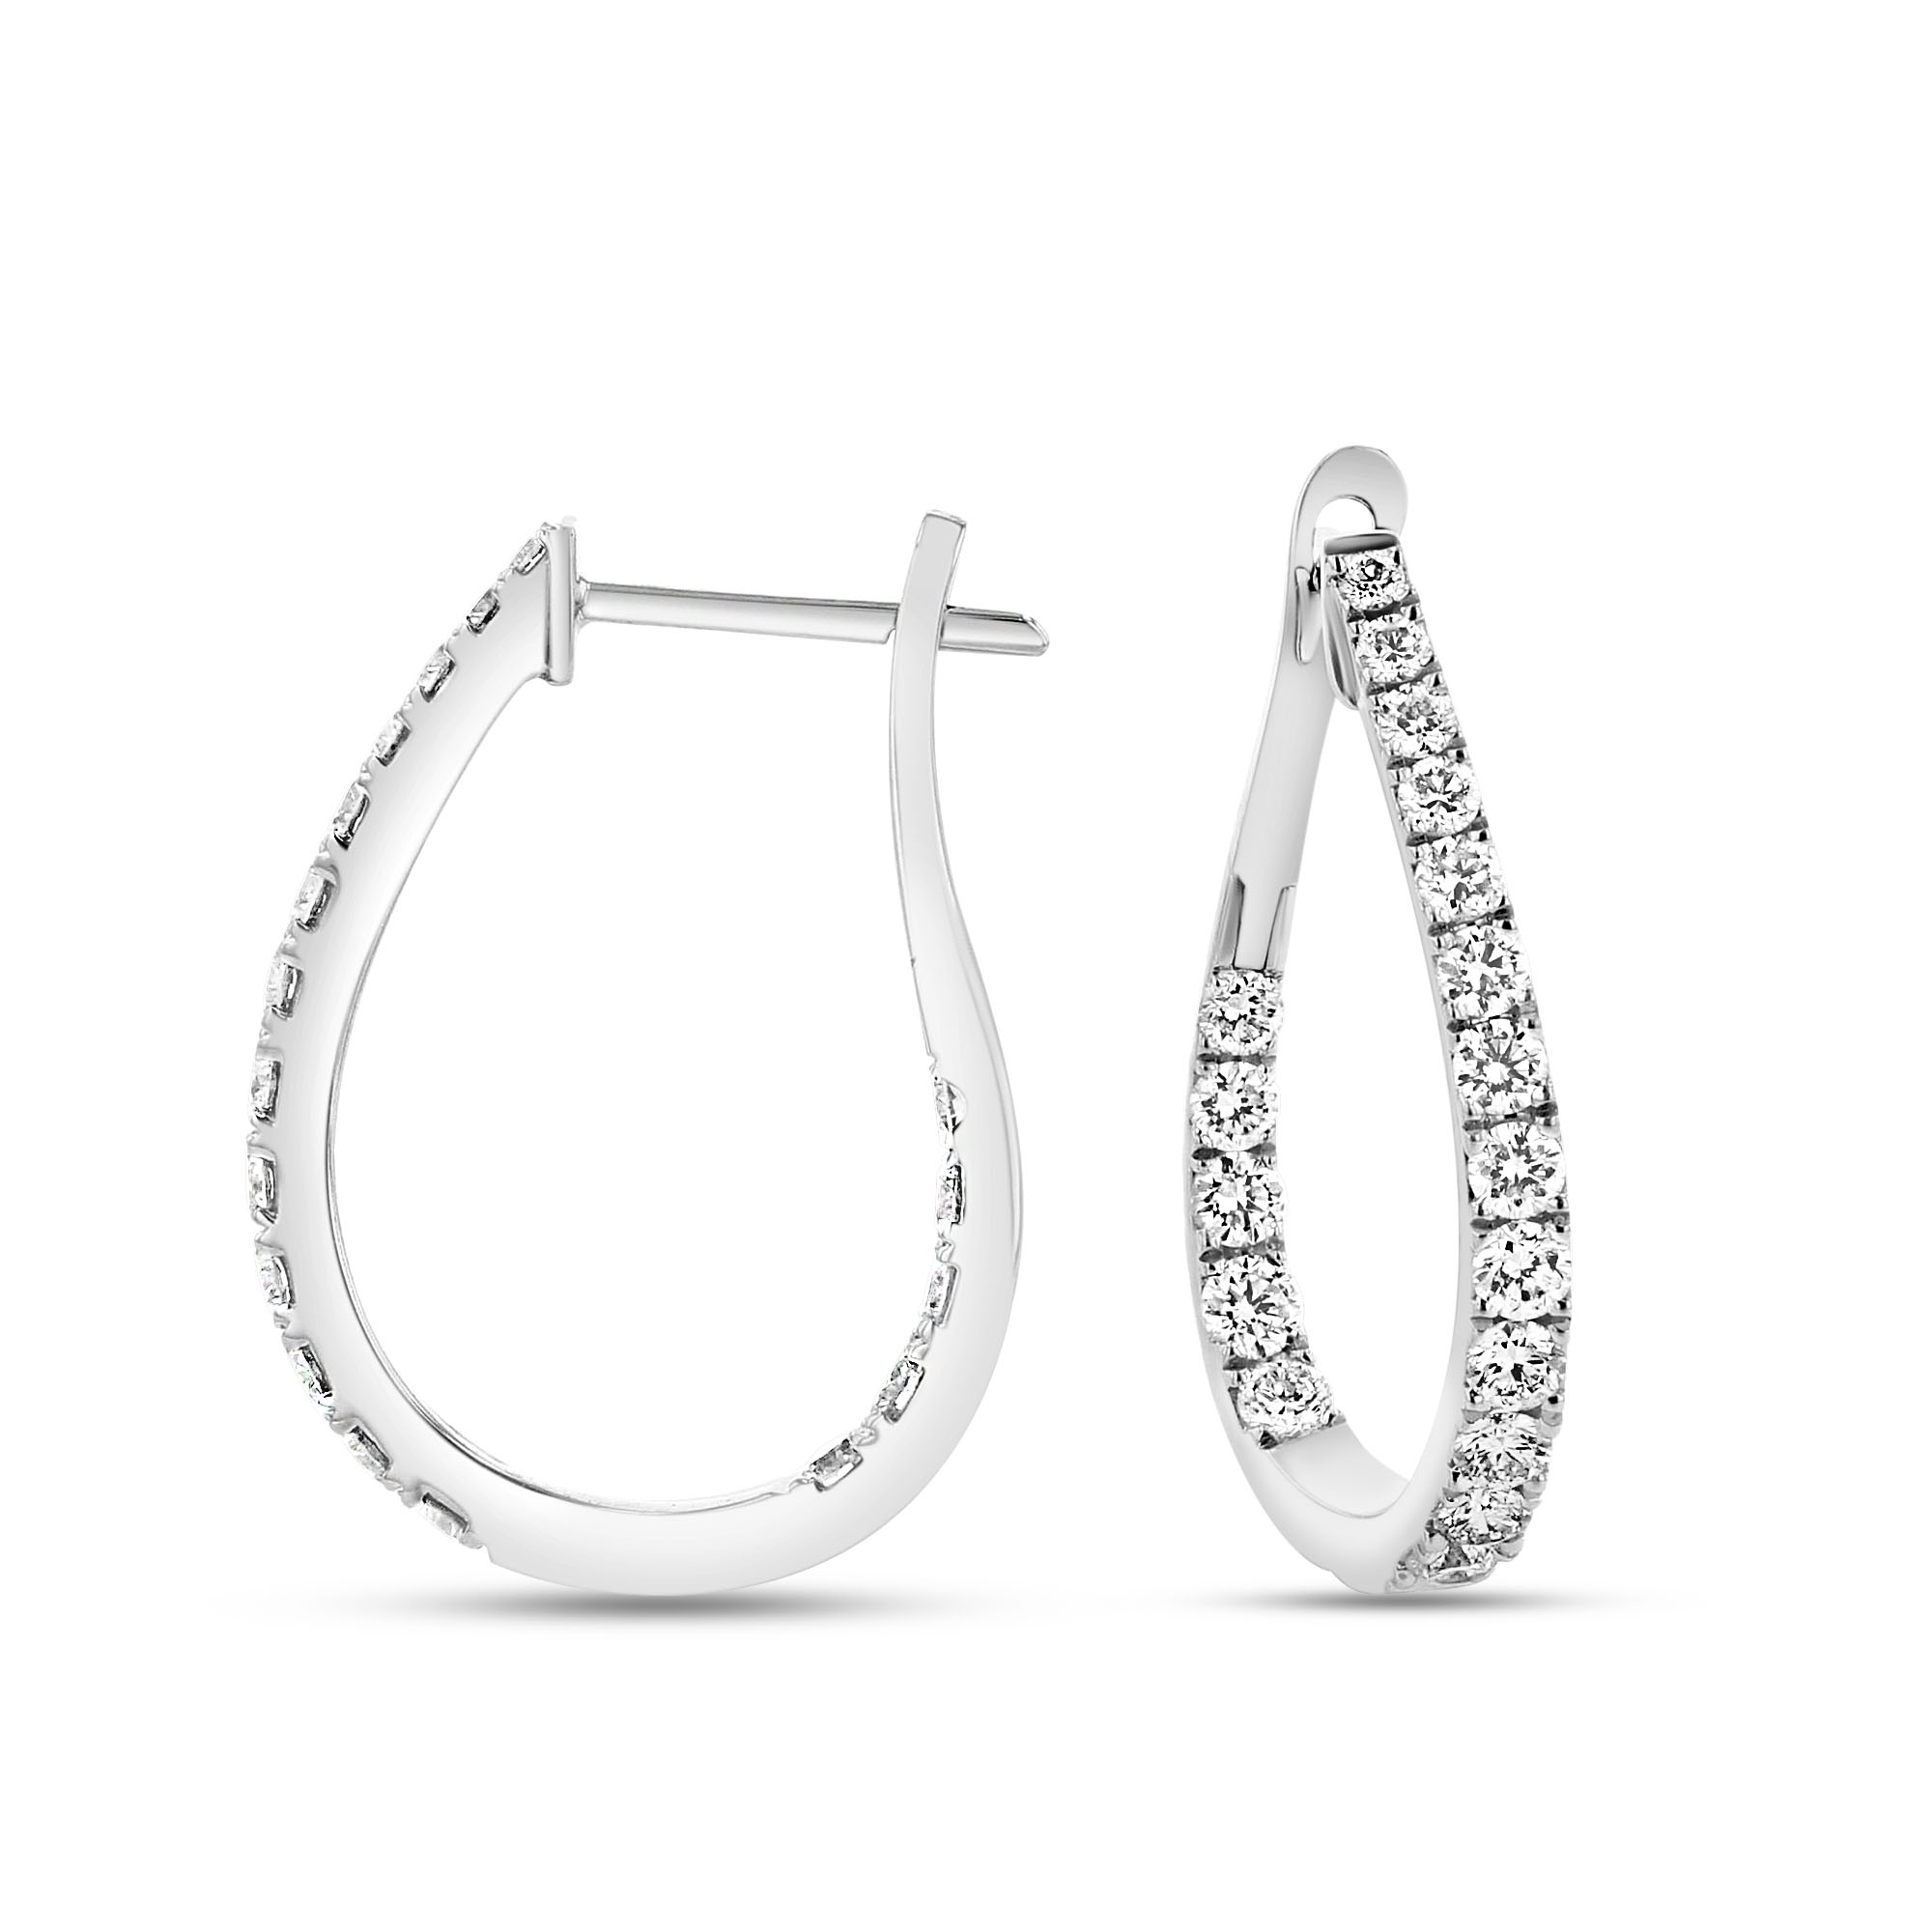 View 0.82ctw Diamond Hoop Earrings in 18k White Gold